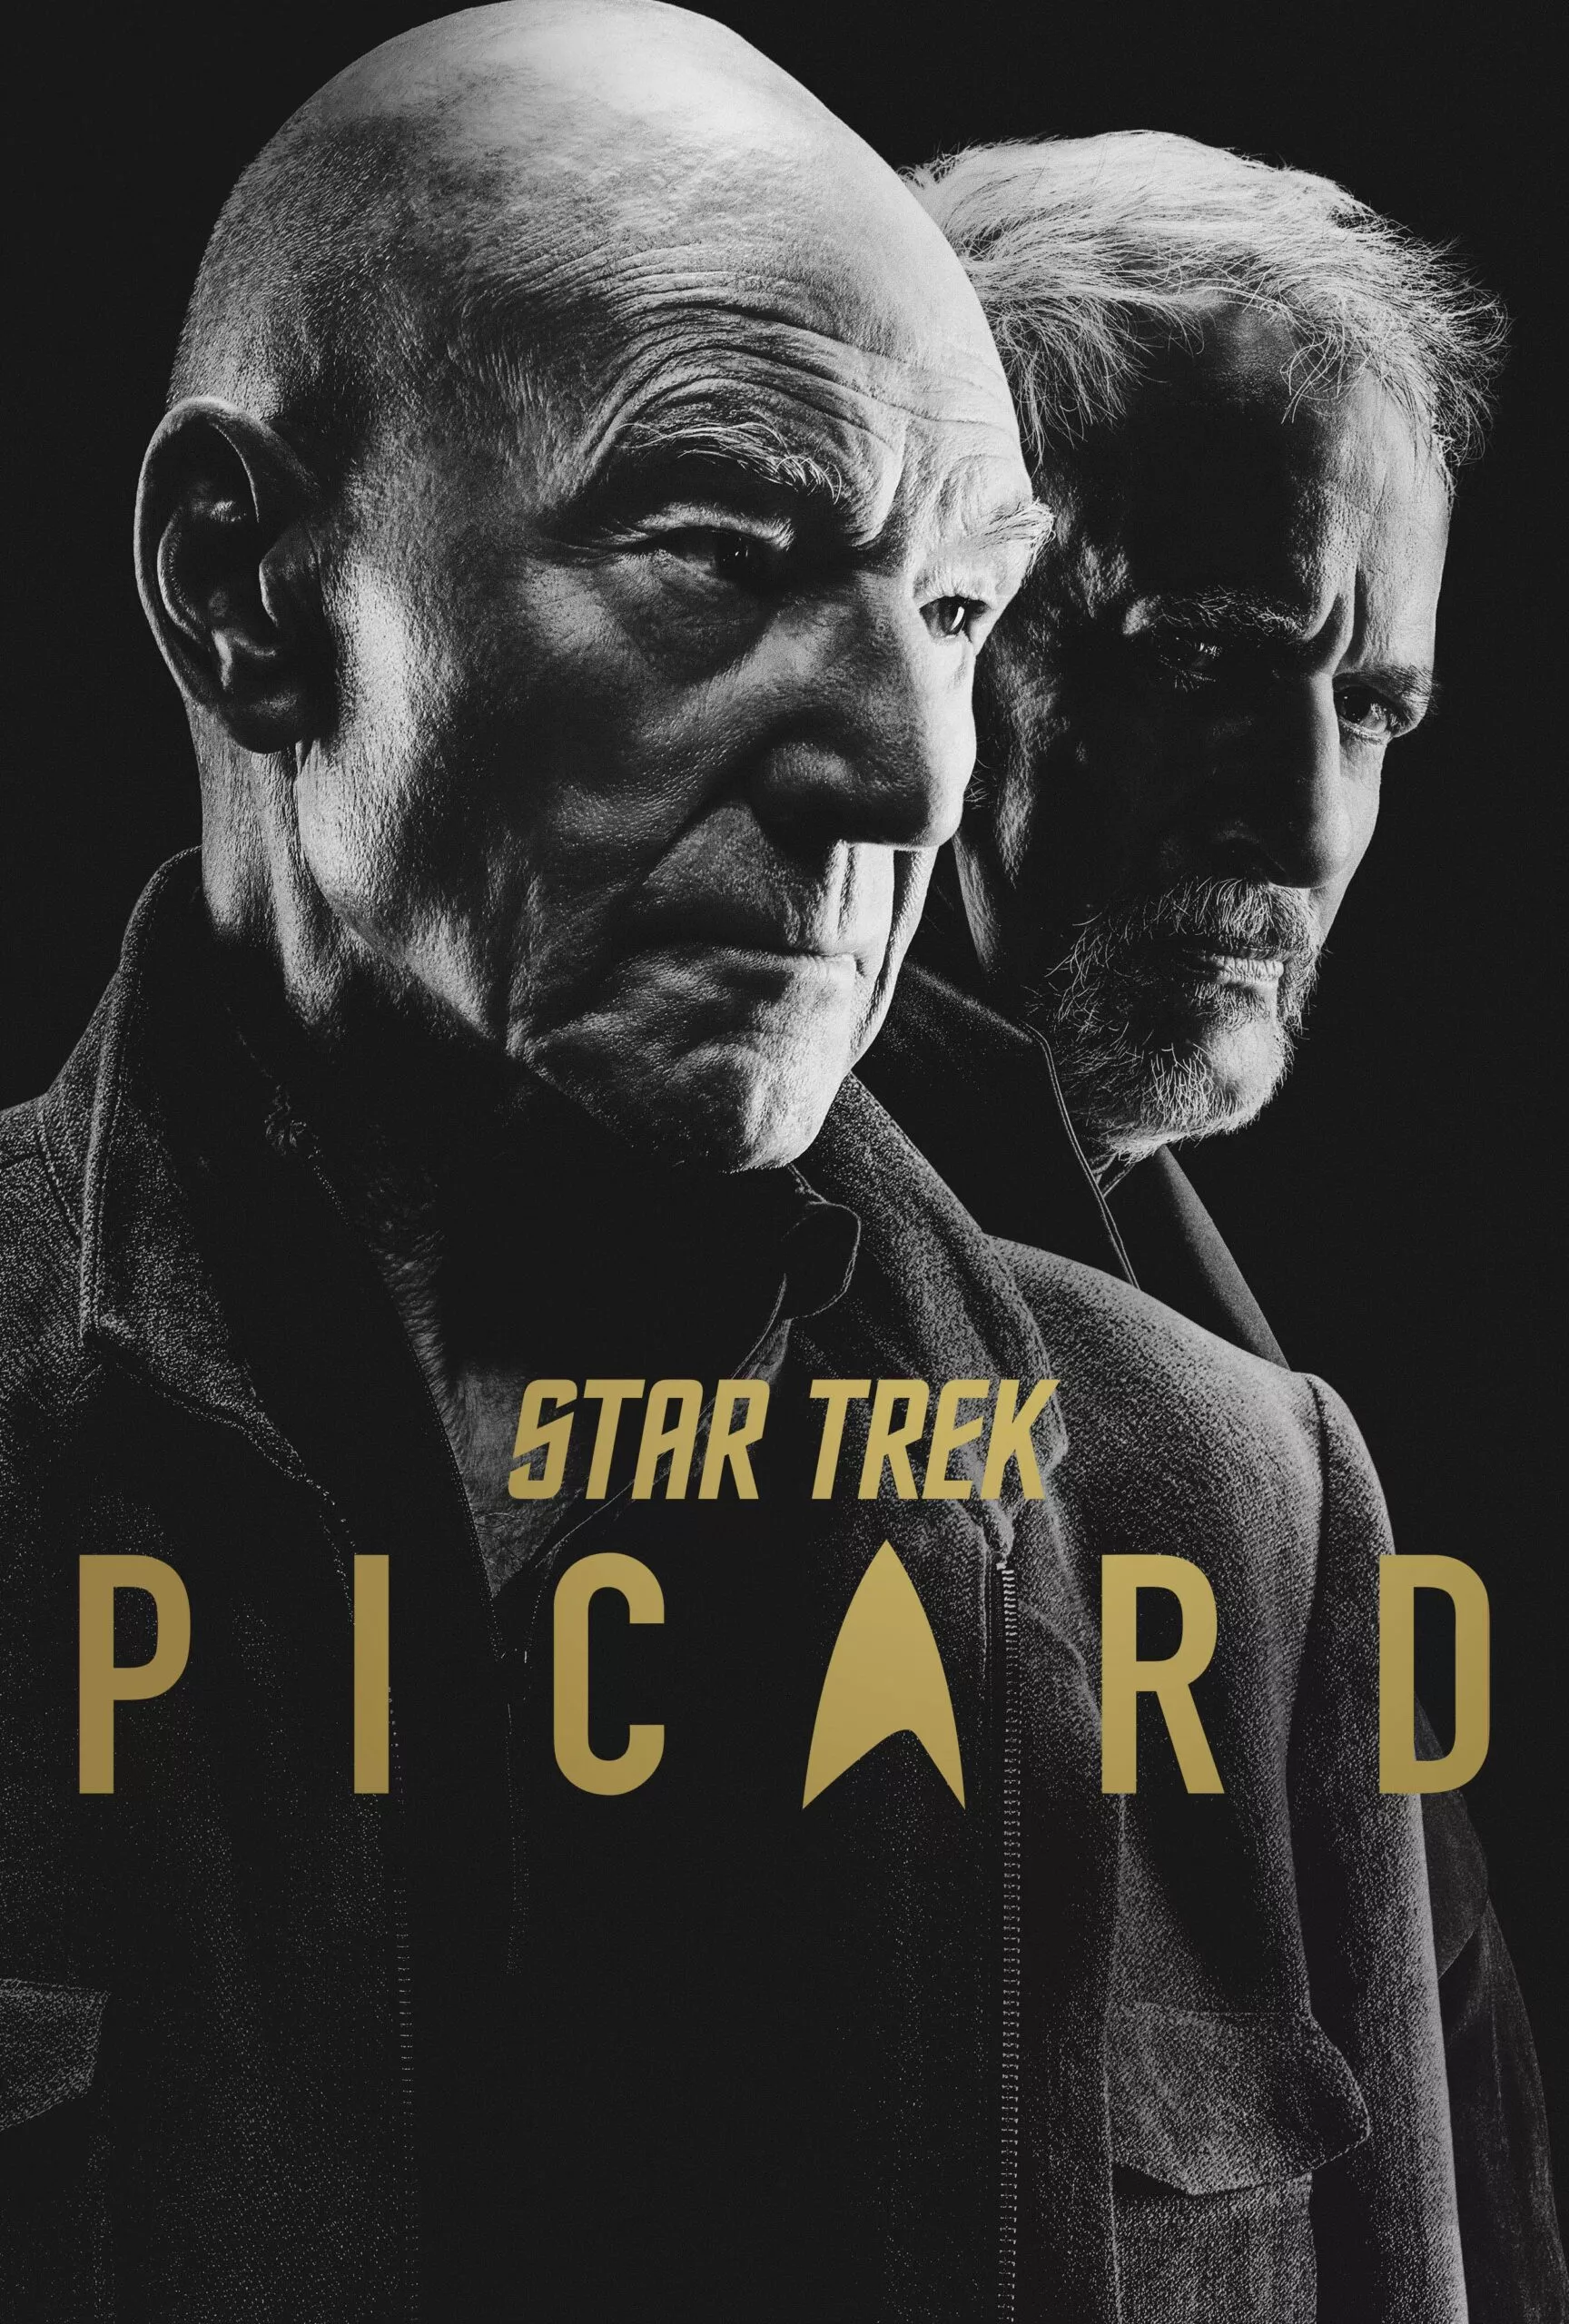 Star Trek: Picard Season 2 | Official Trailer | Prime Video